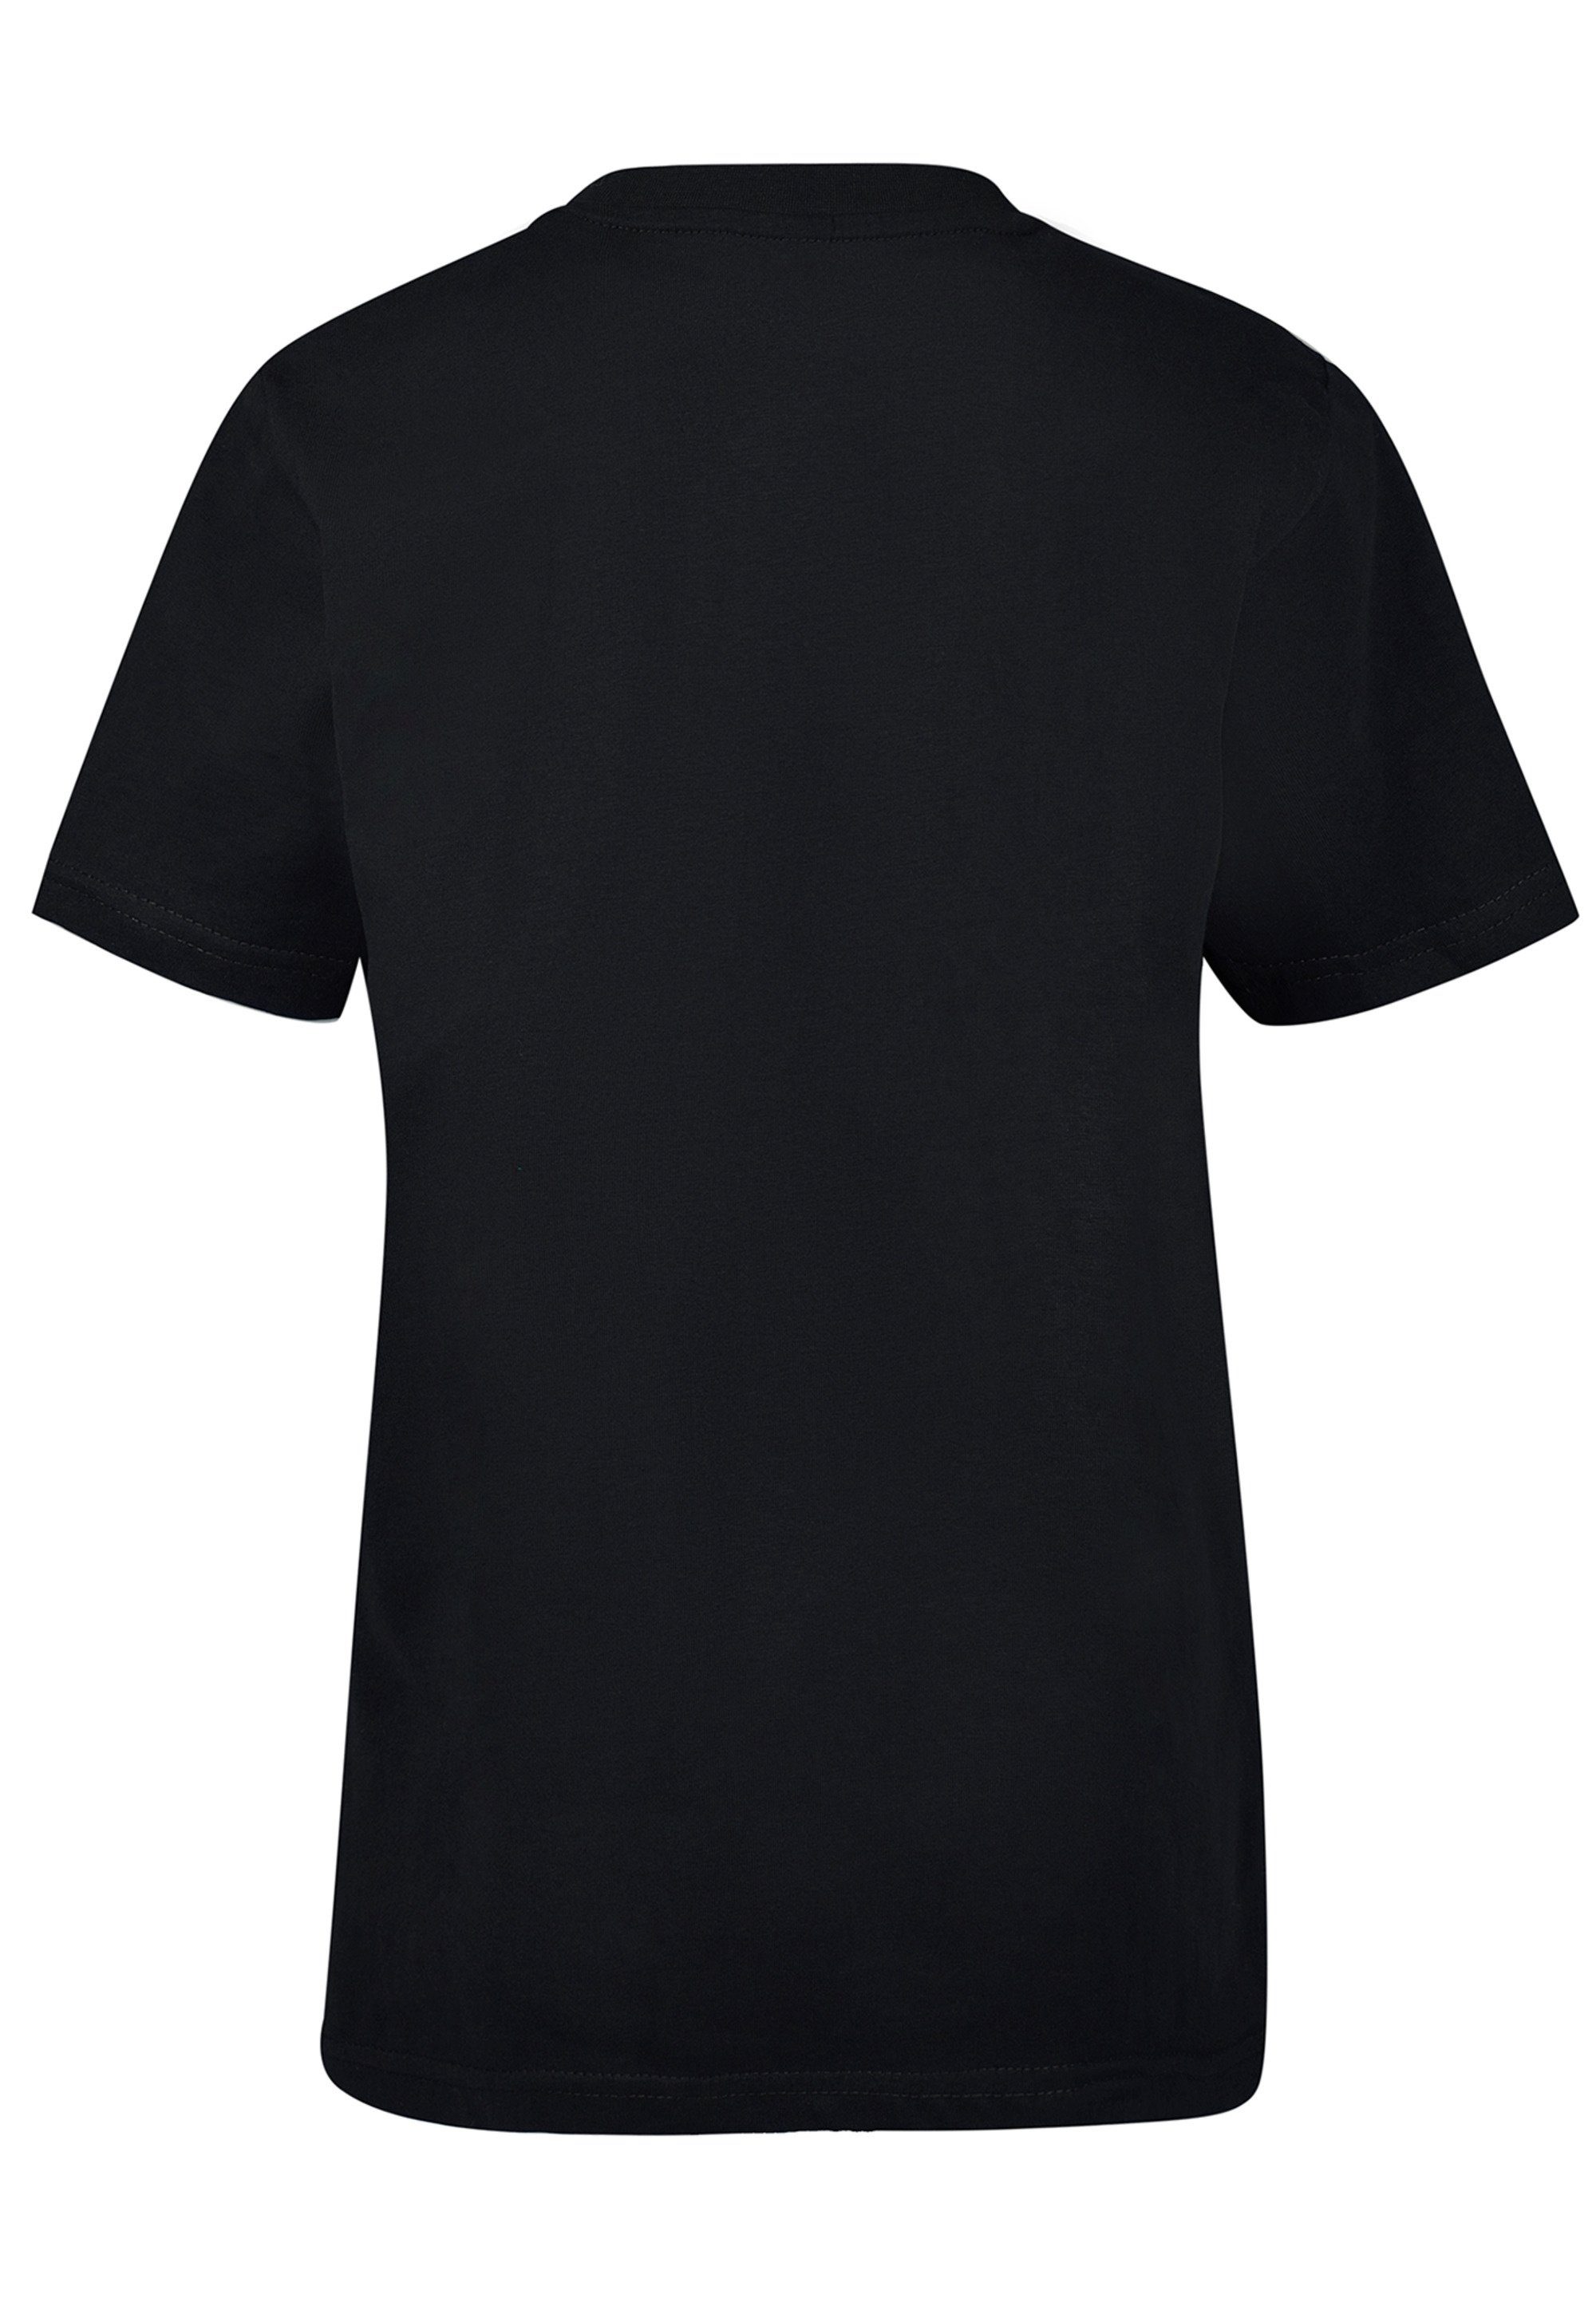 F4NT4STIC T-Shirt Basketball Splash Sport Print UNISEX schwarz